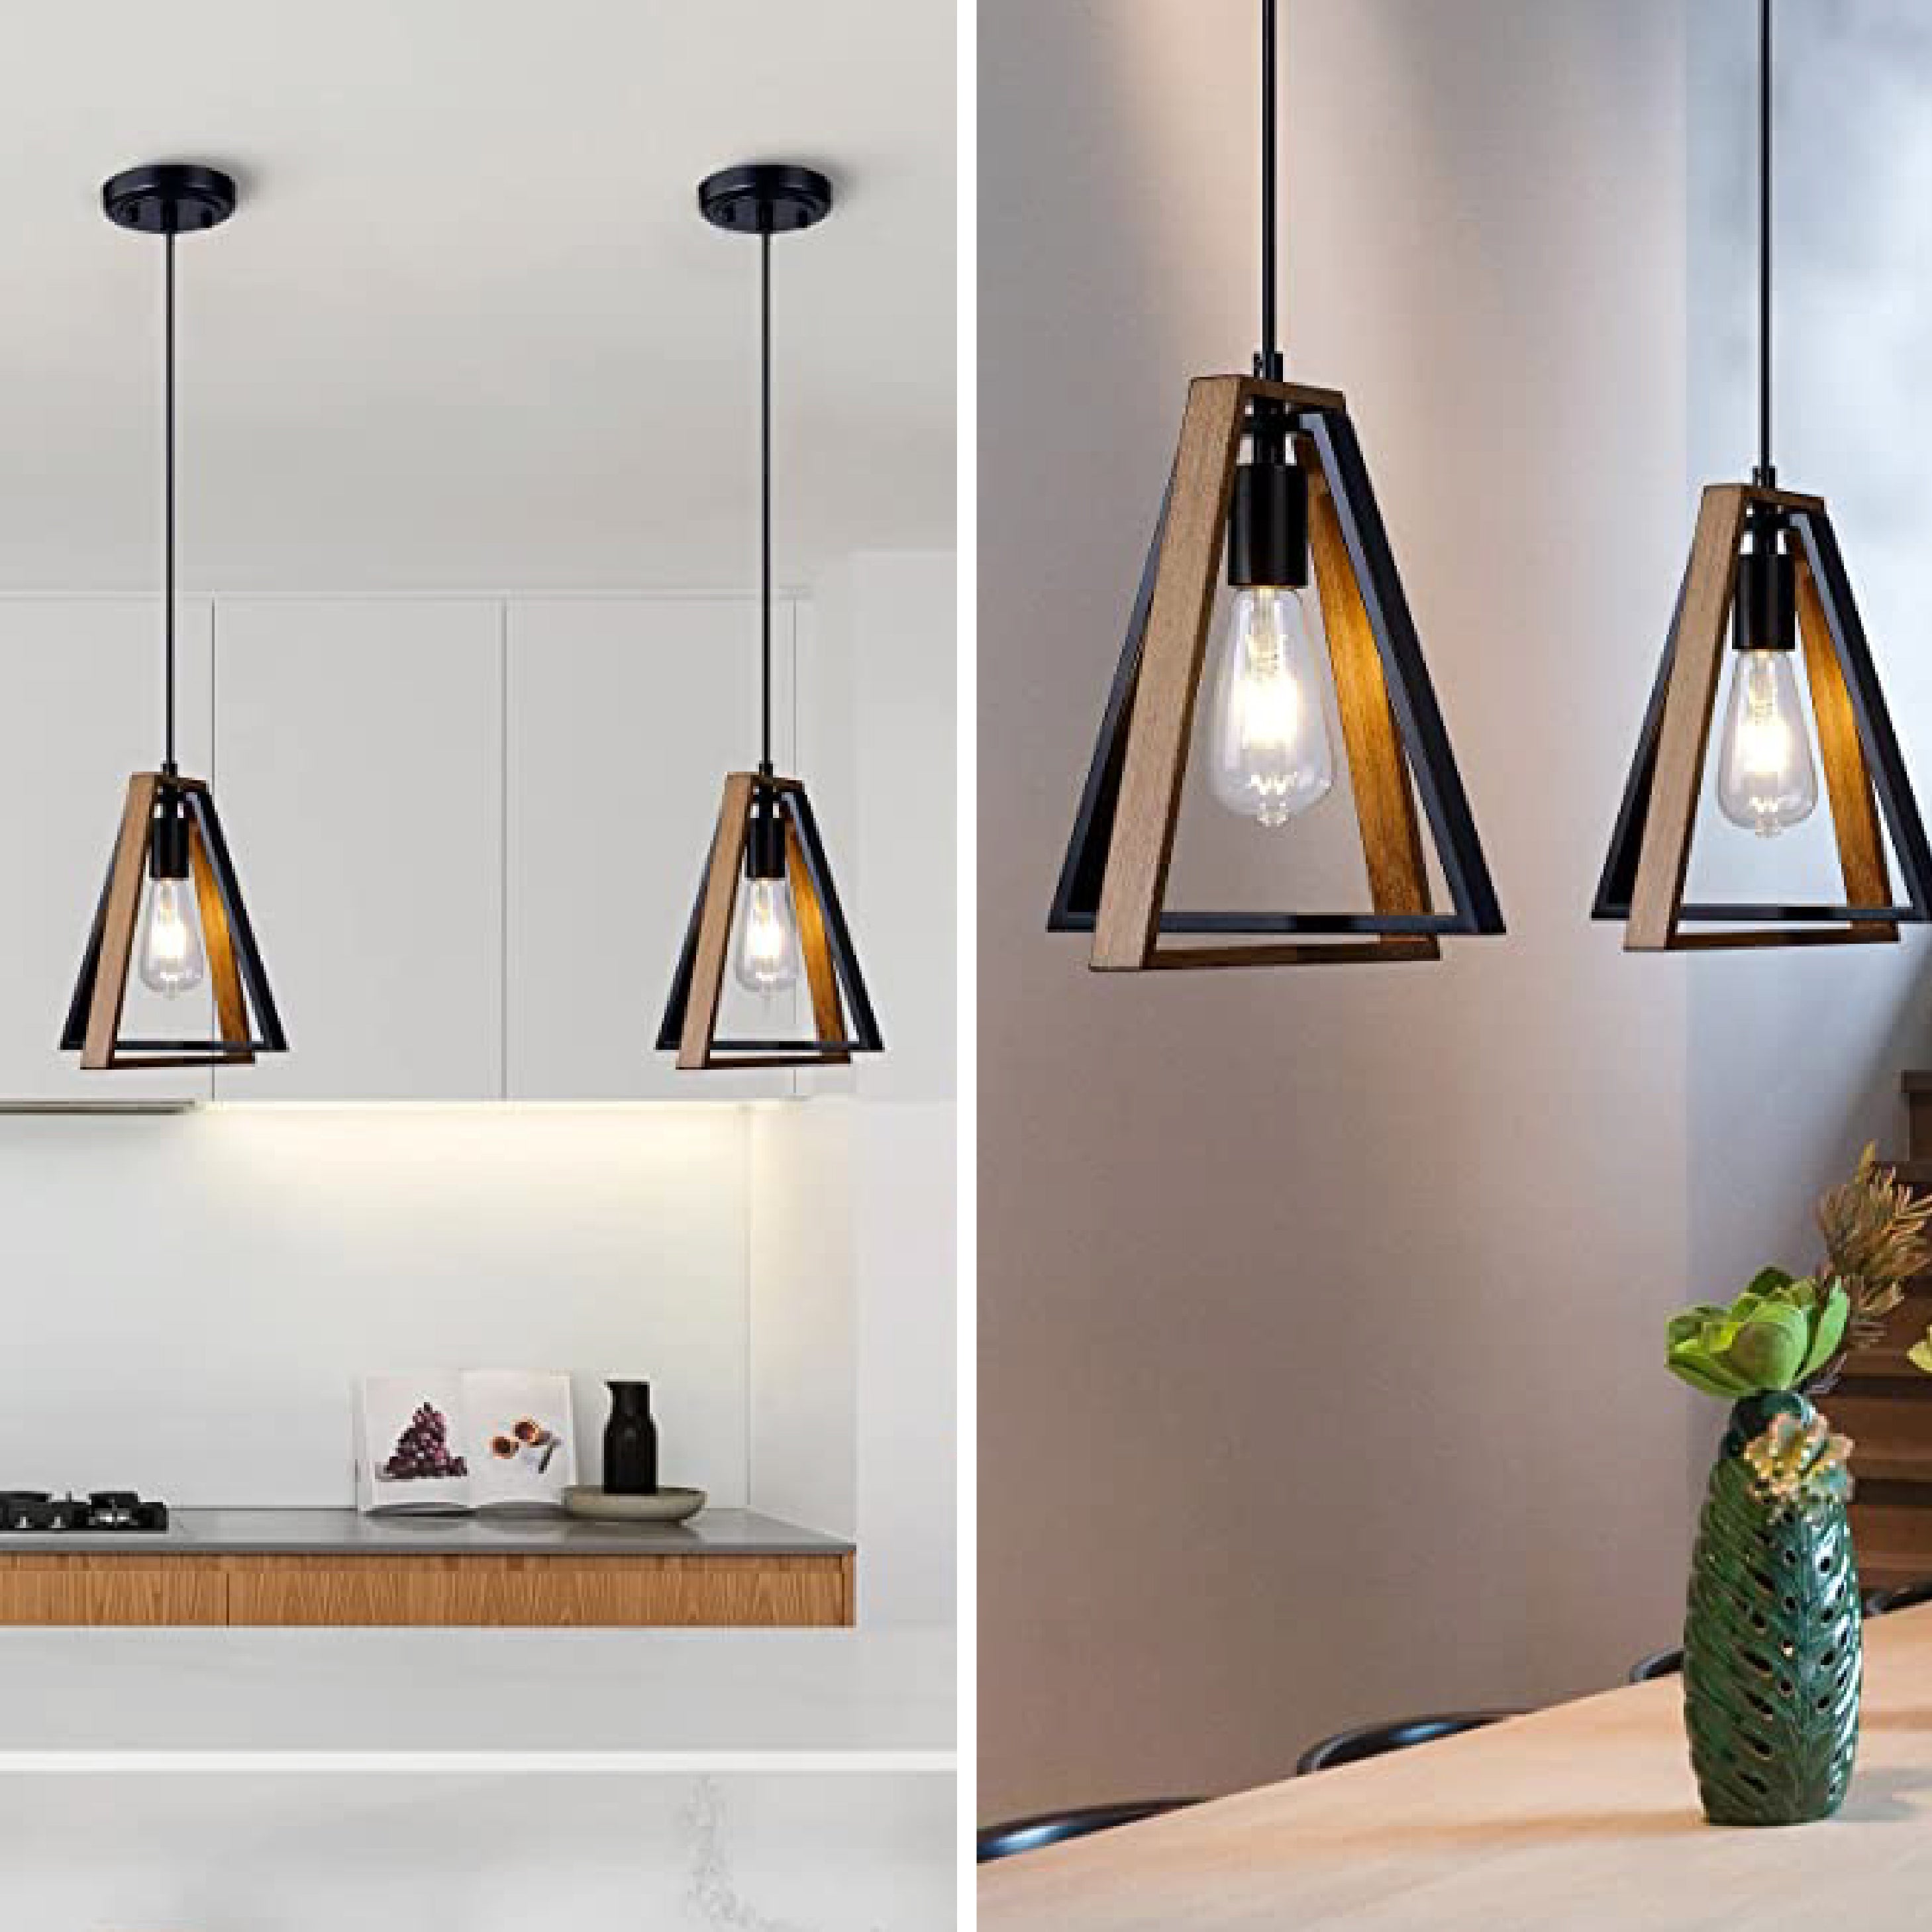 Black & Wood pendant light Adjustable Kitchen Island light Metal Steel Hanging Light Fixture